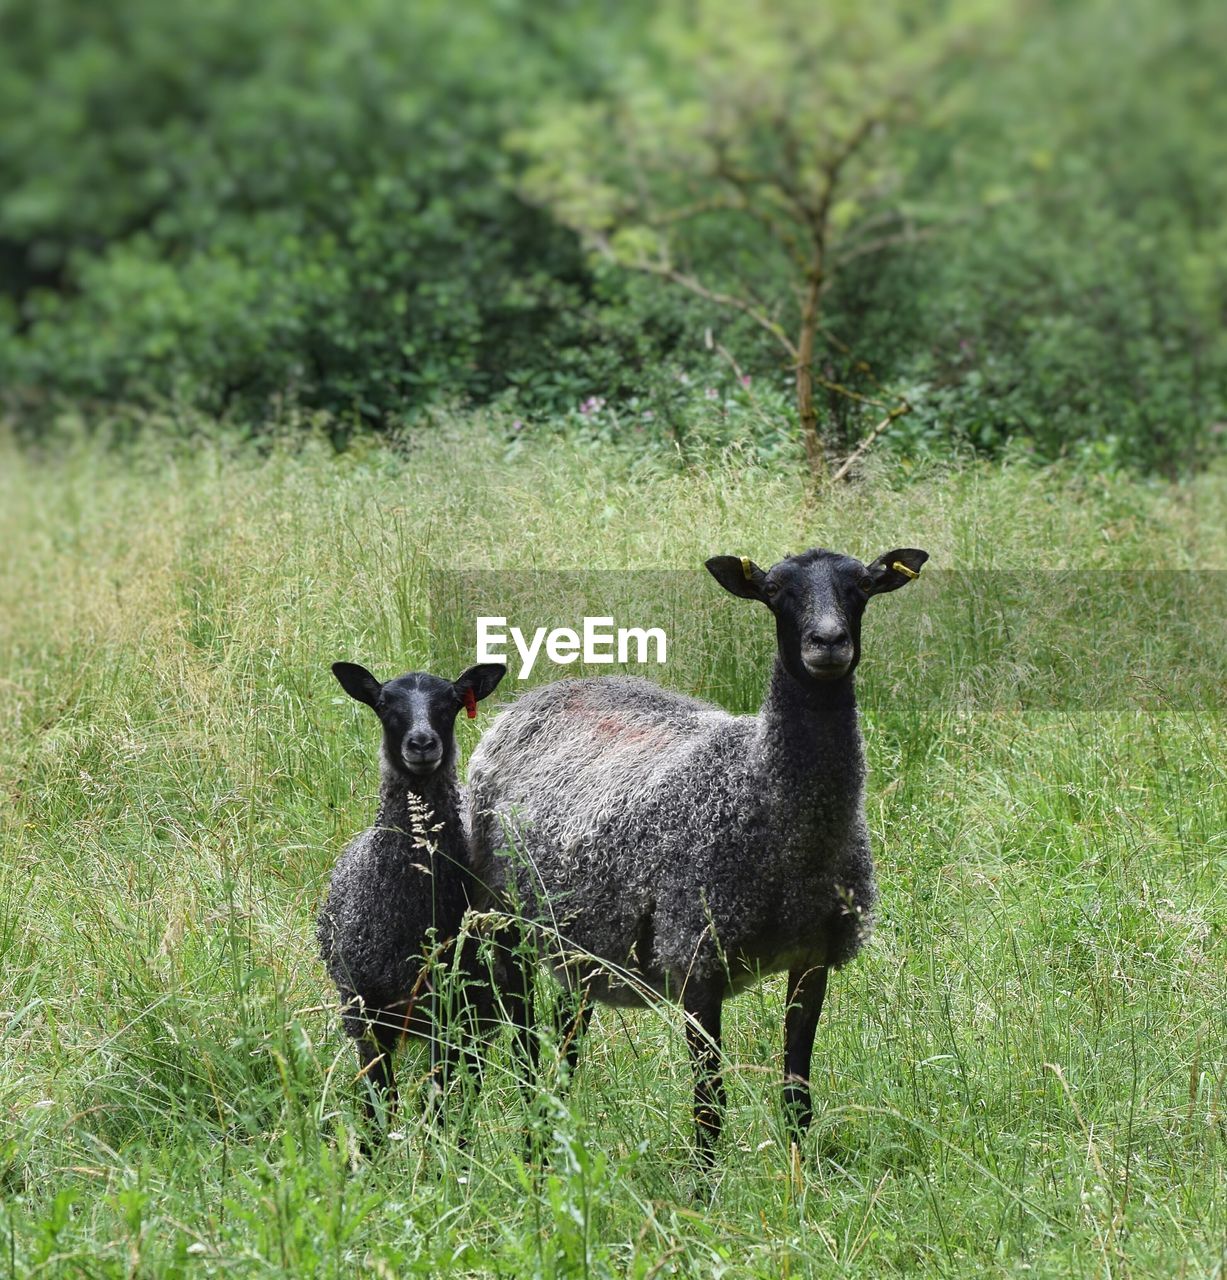 PORTRAIT OF SHEEP ON GRASS FIELD